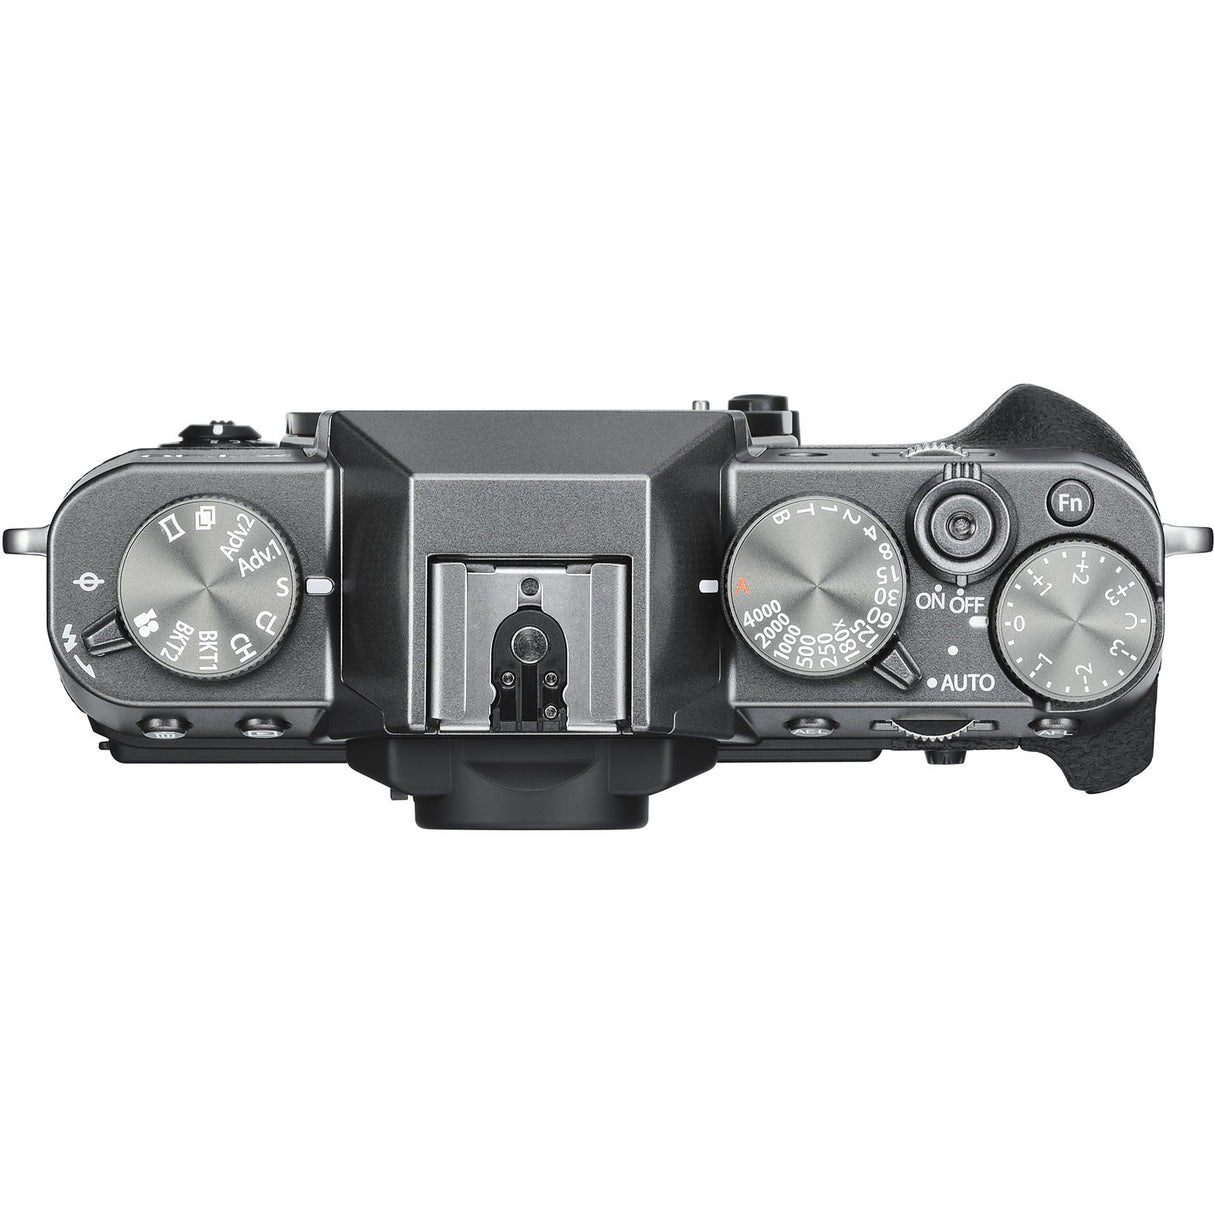 FUJIFILM X-T30 Mirrorless Digital Camera (Body Only) Silver